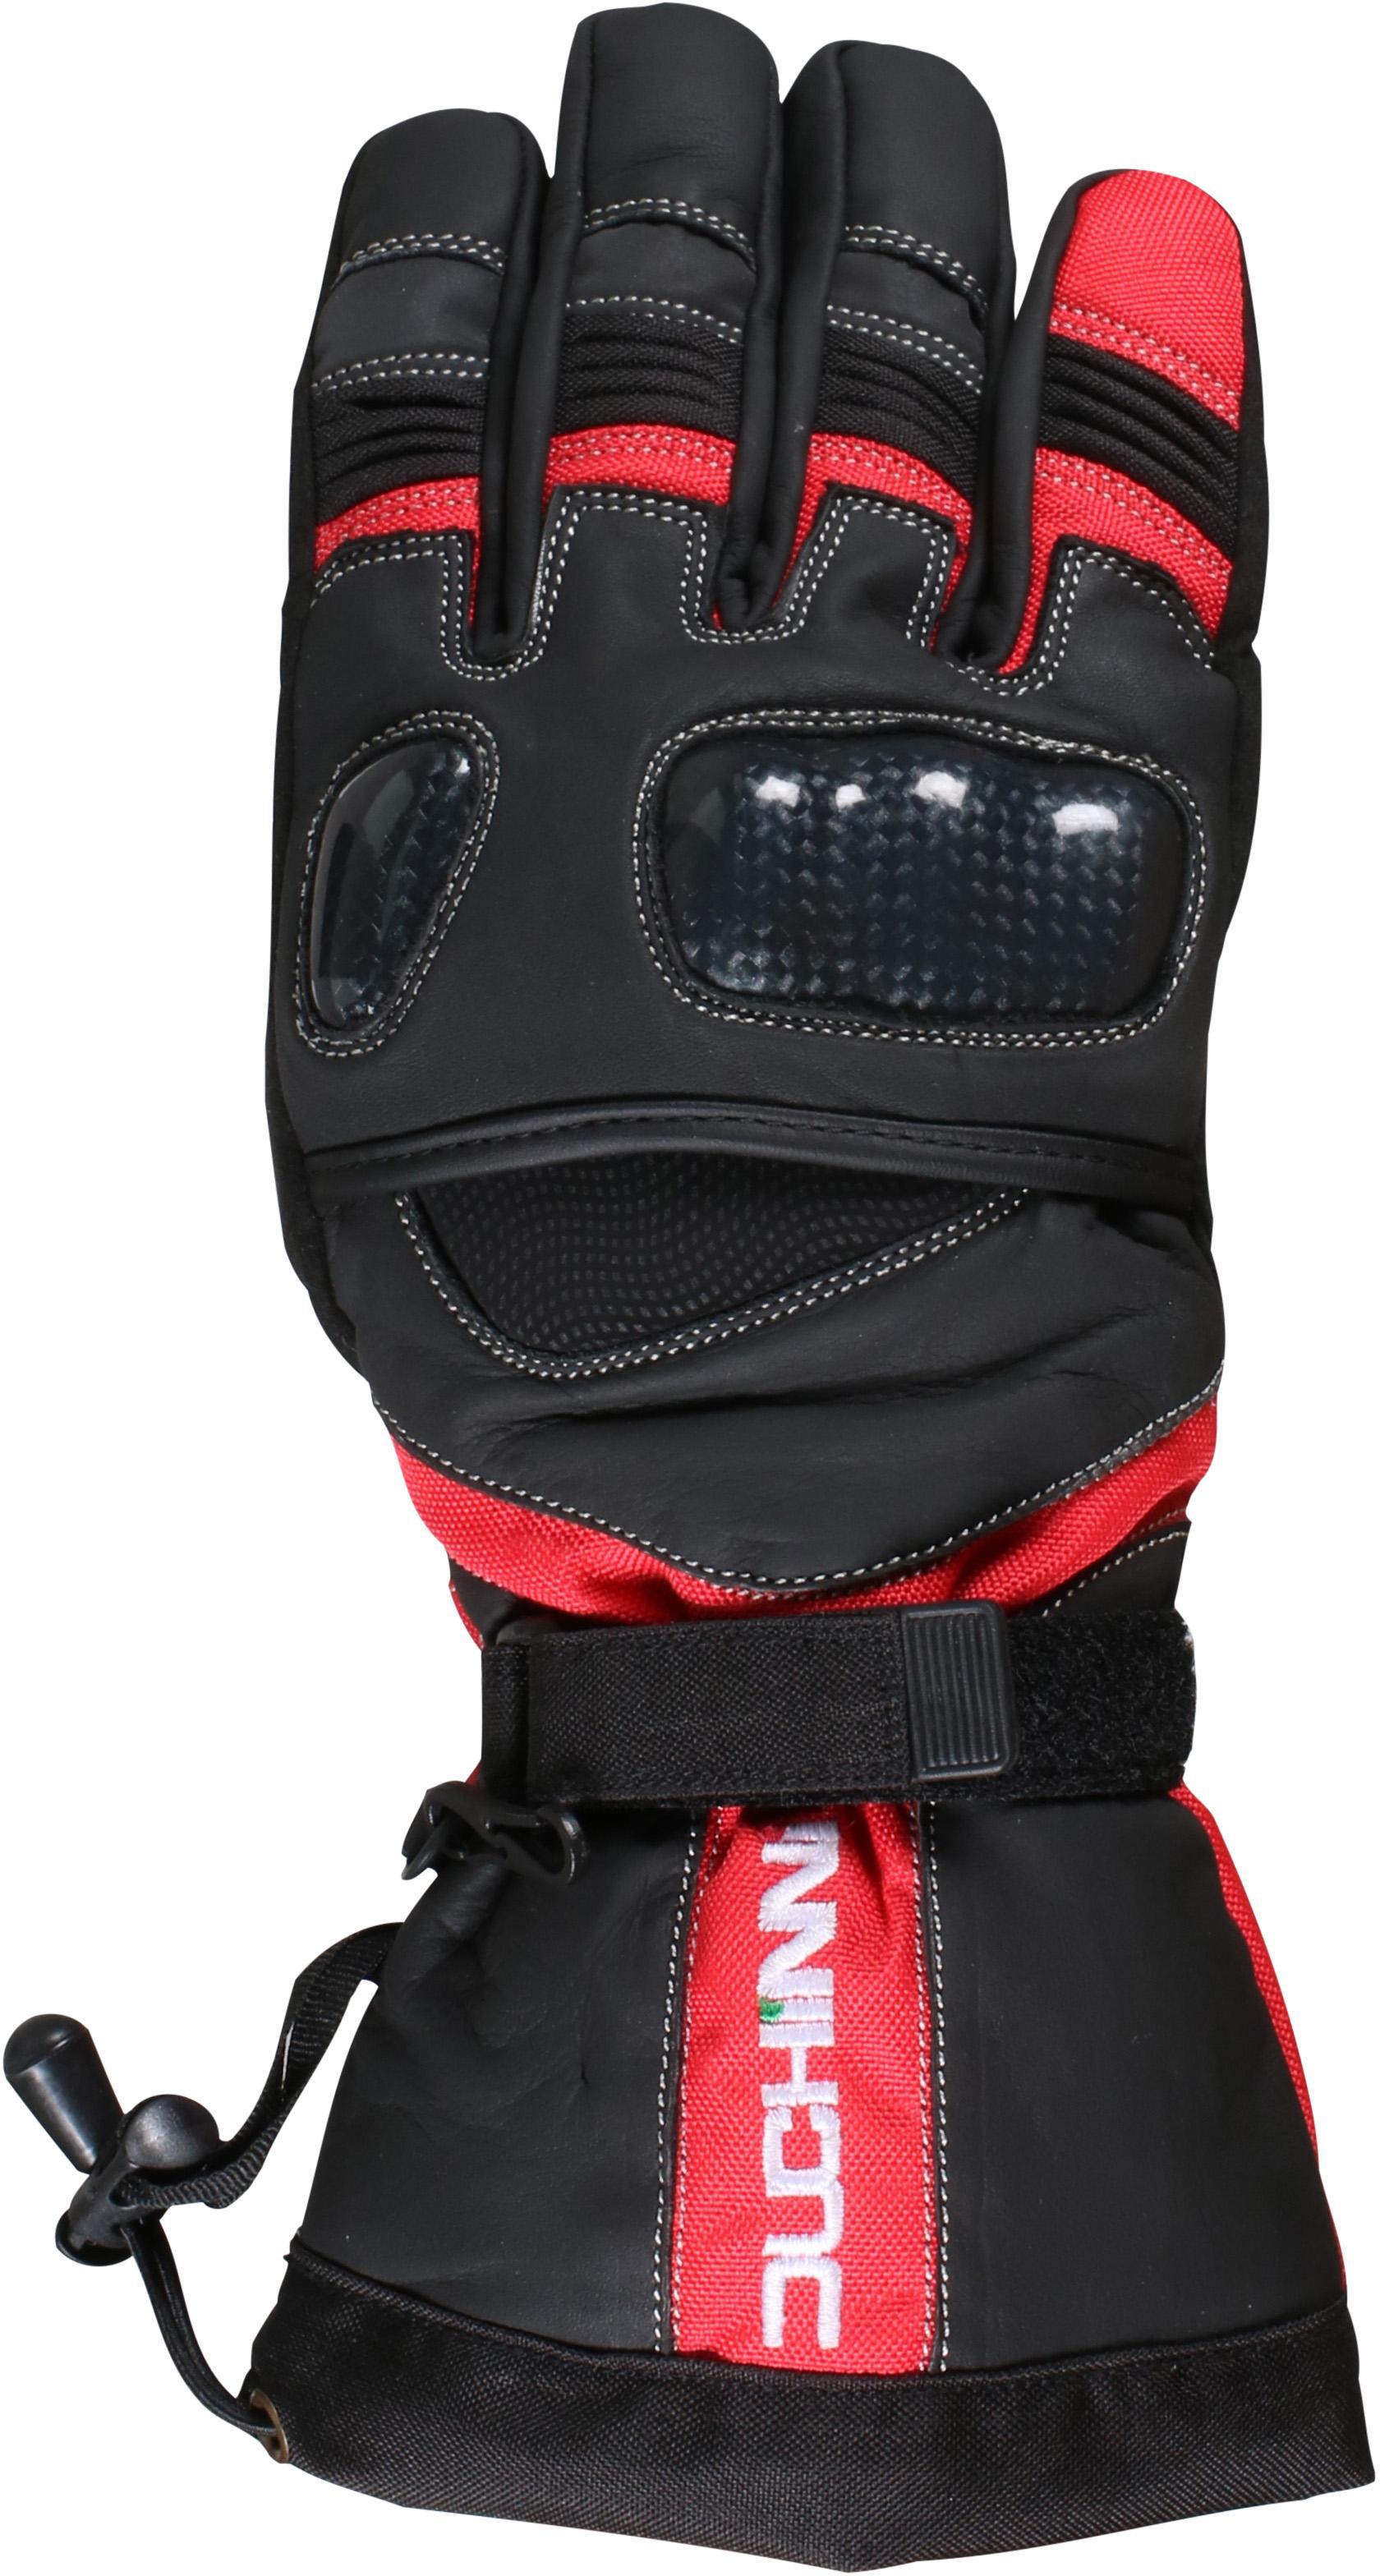 Duchinni Yukon Motorcycle Gloves - Black And Red, S